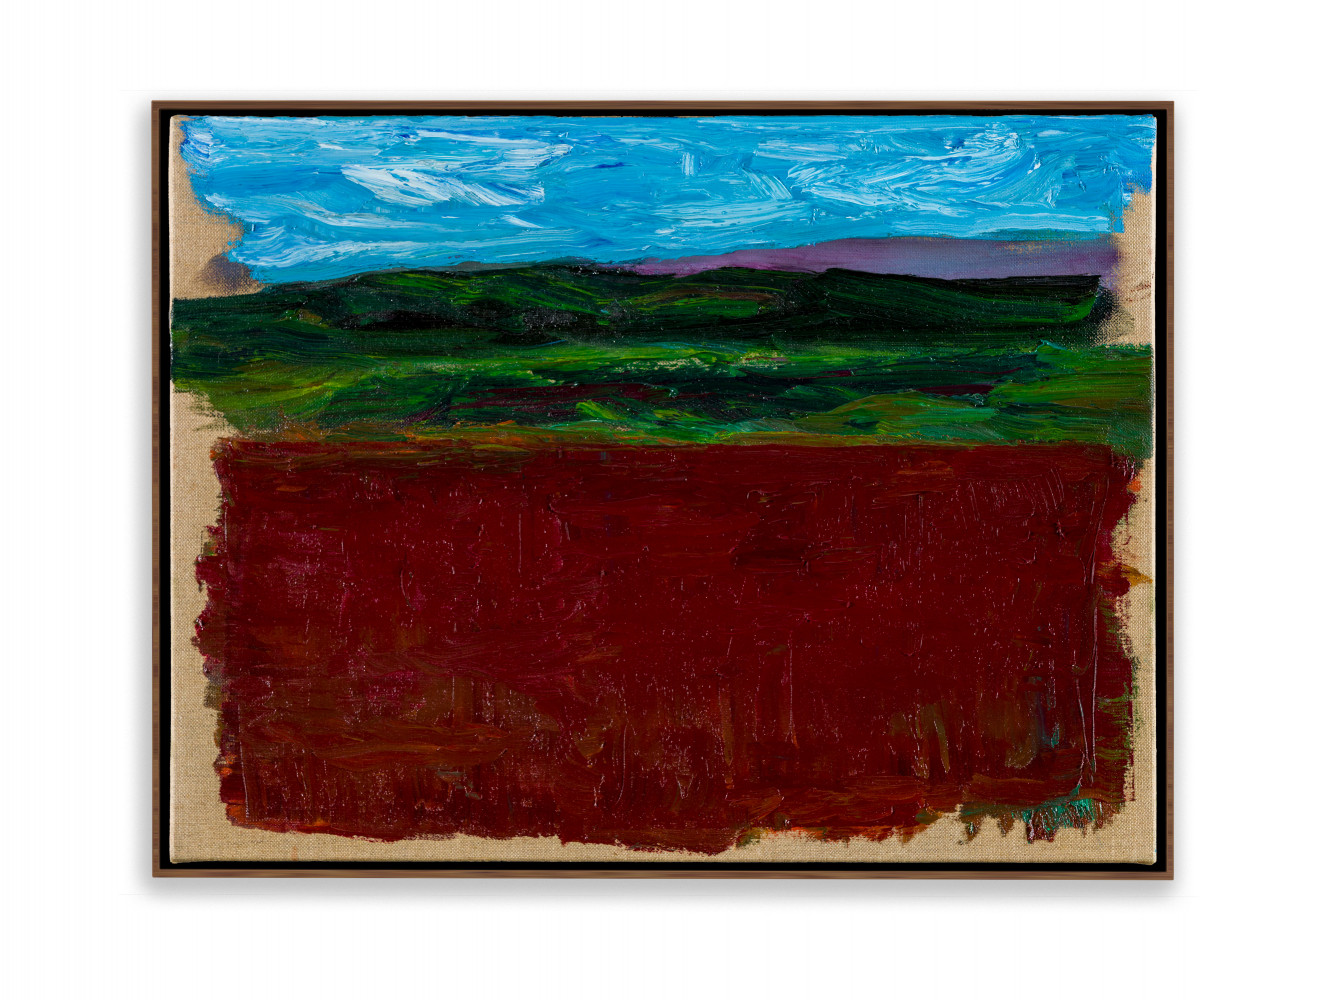 Pedro Cabrita Reis, ‘Landscapes (series XI) #2’, 2020, Oil on raw canvas